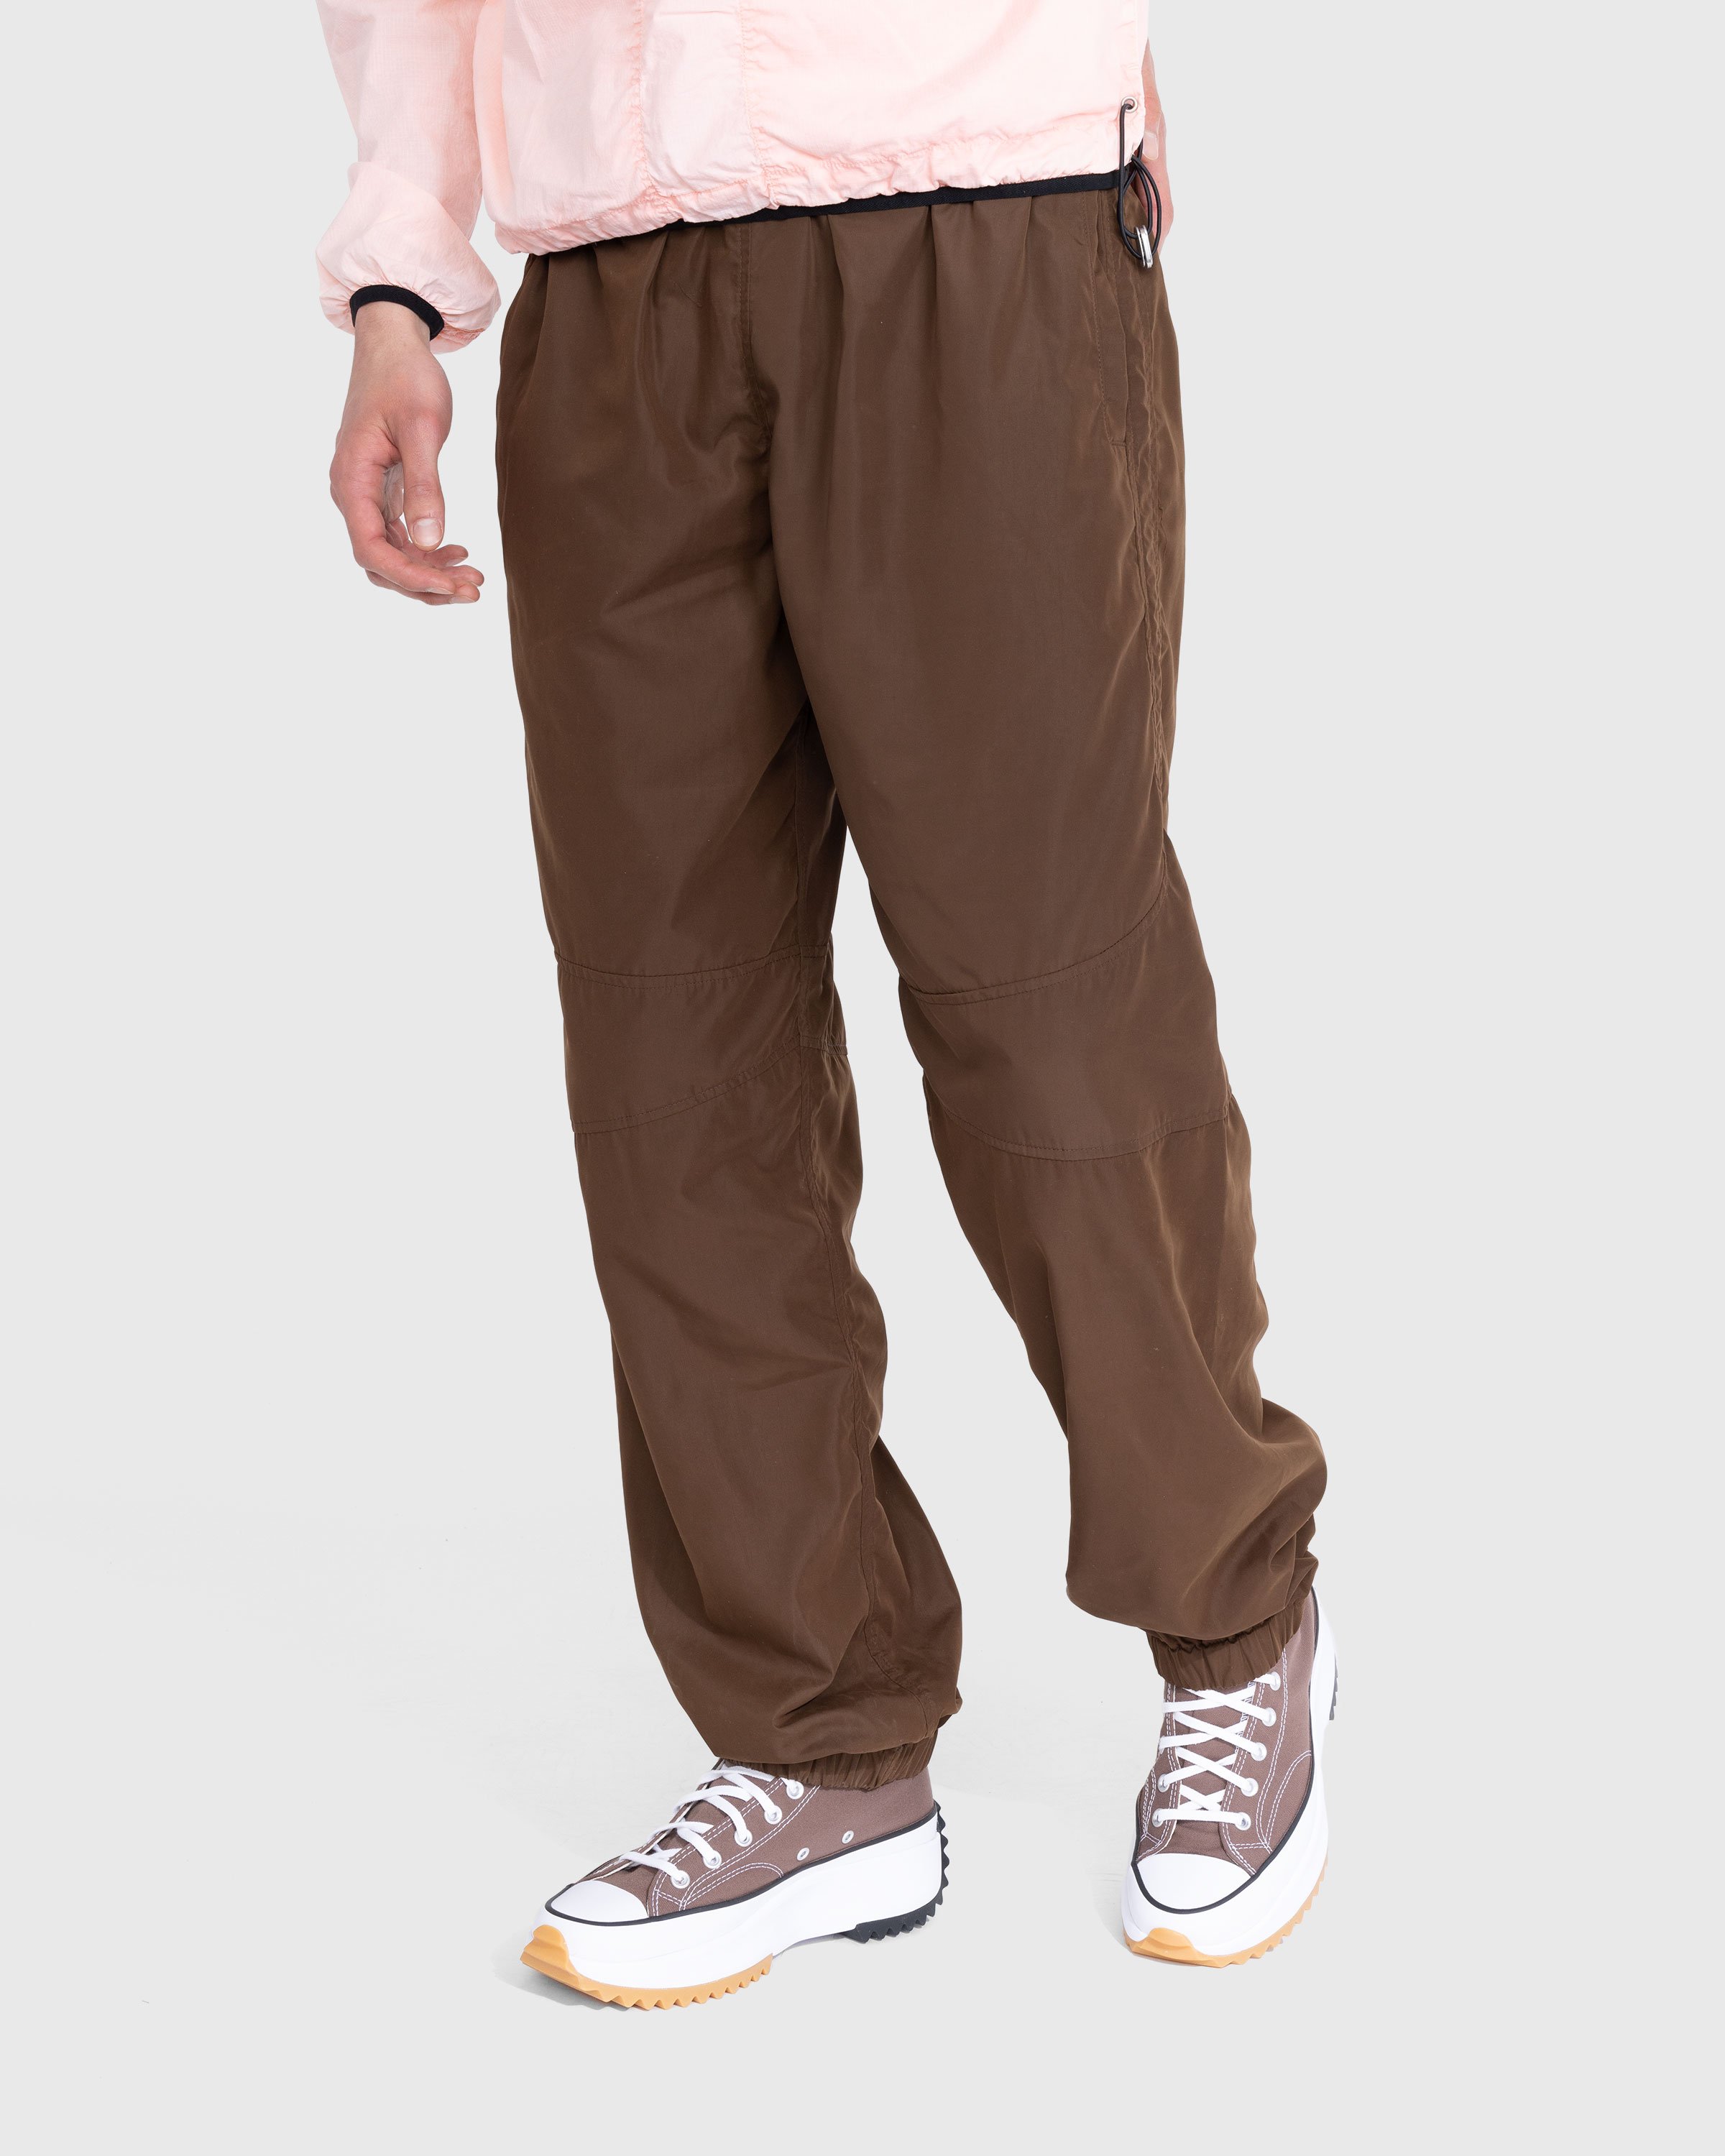 RANRA - Is Pants Brown - Clothing - Brown - Image 2